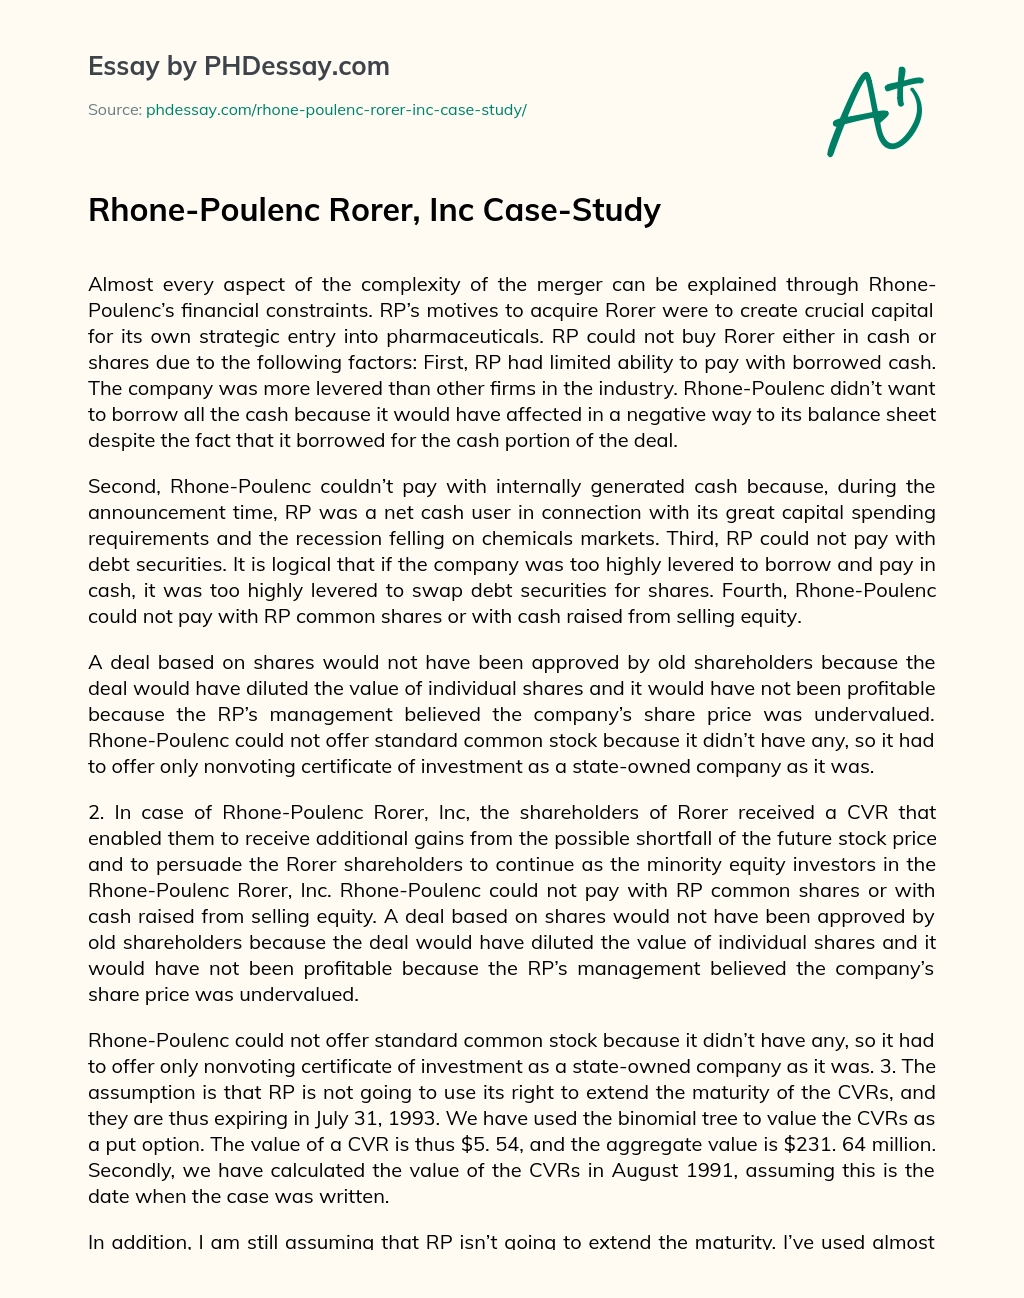 Rhone-Poulenc Rorer, Inc Case-Study essay